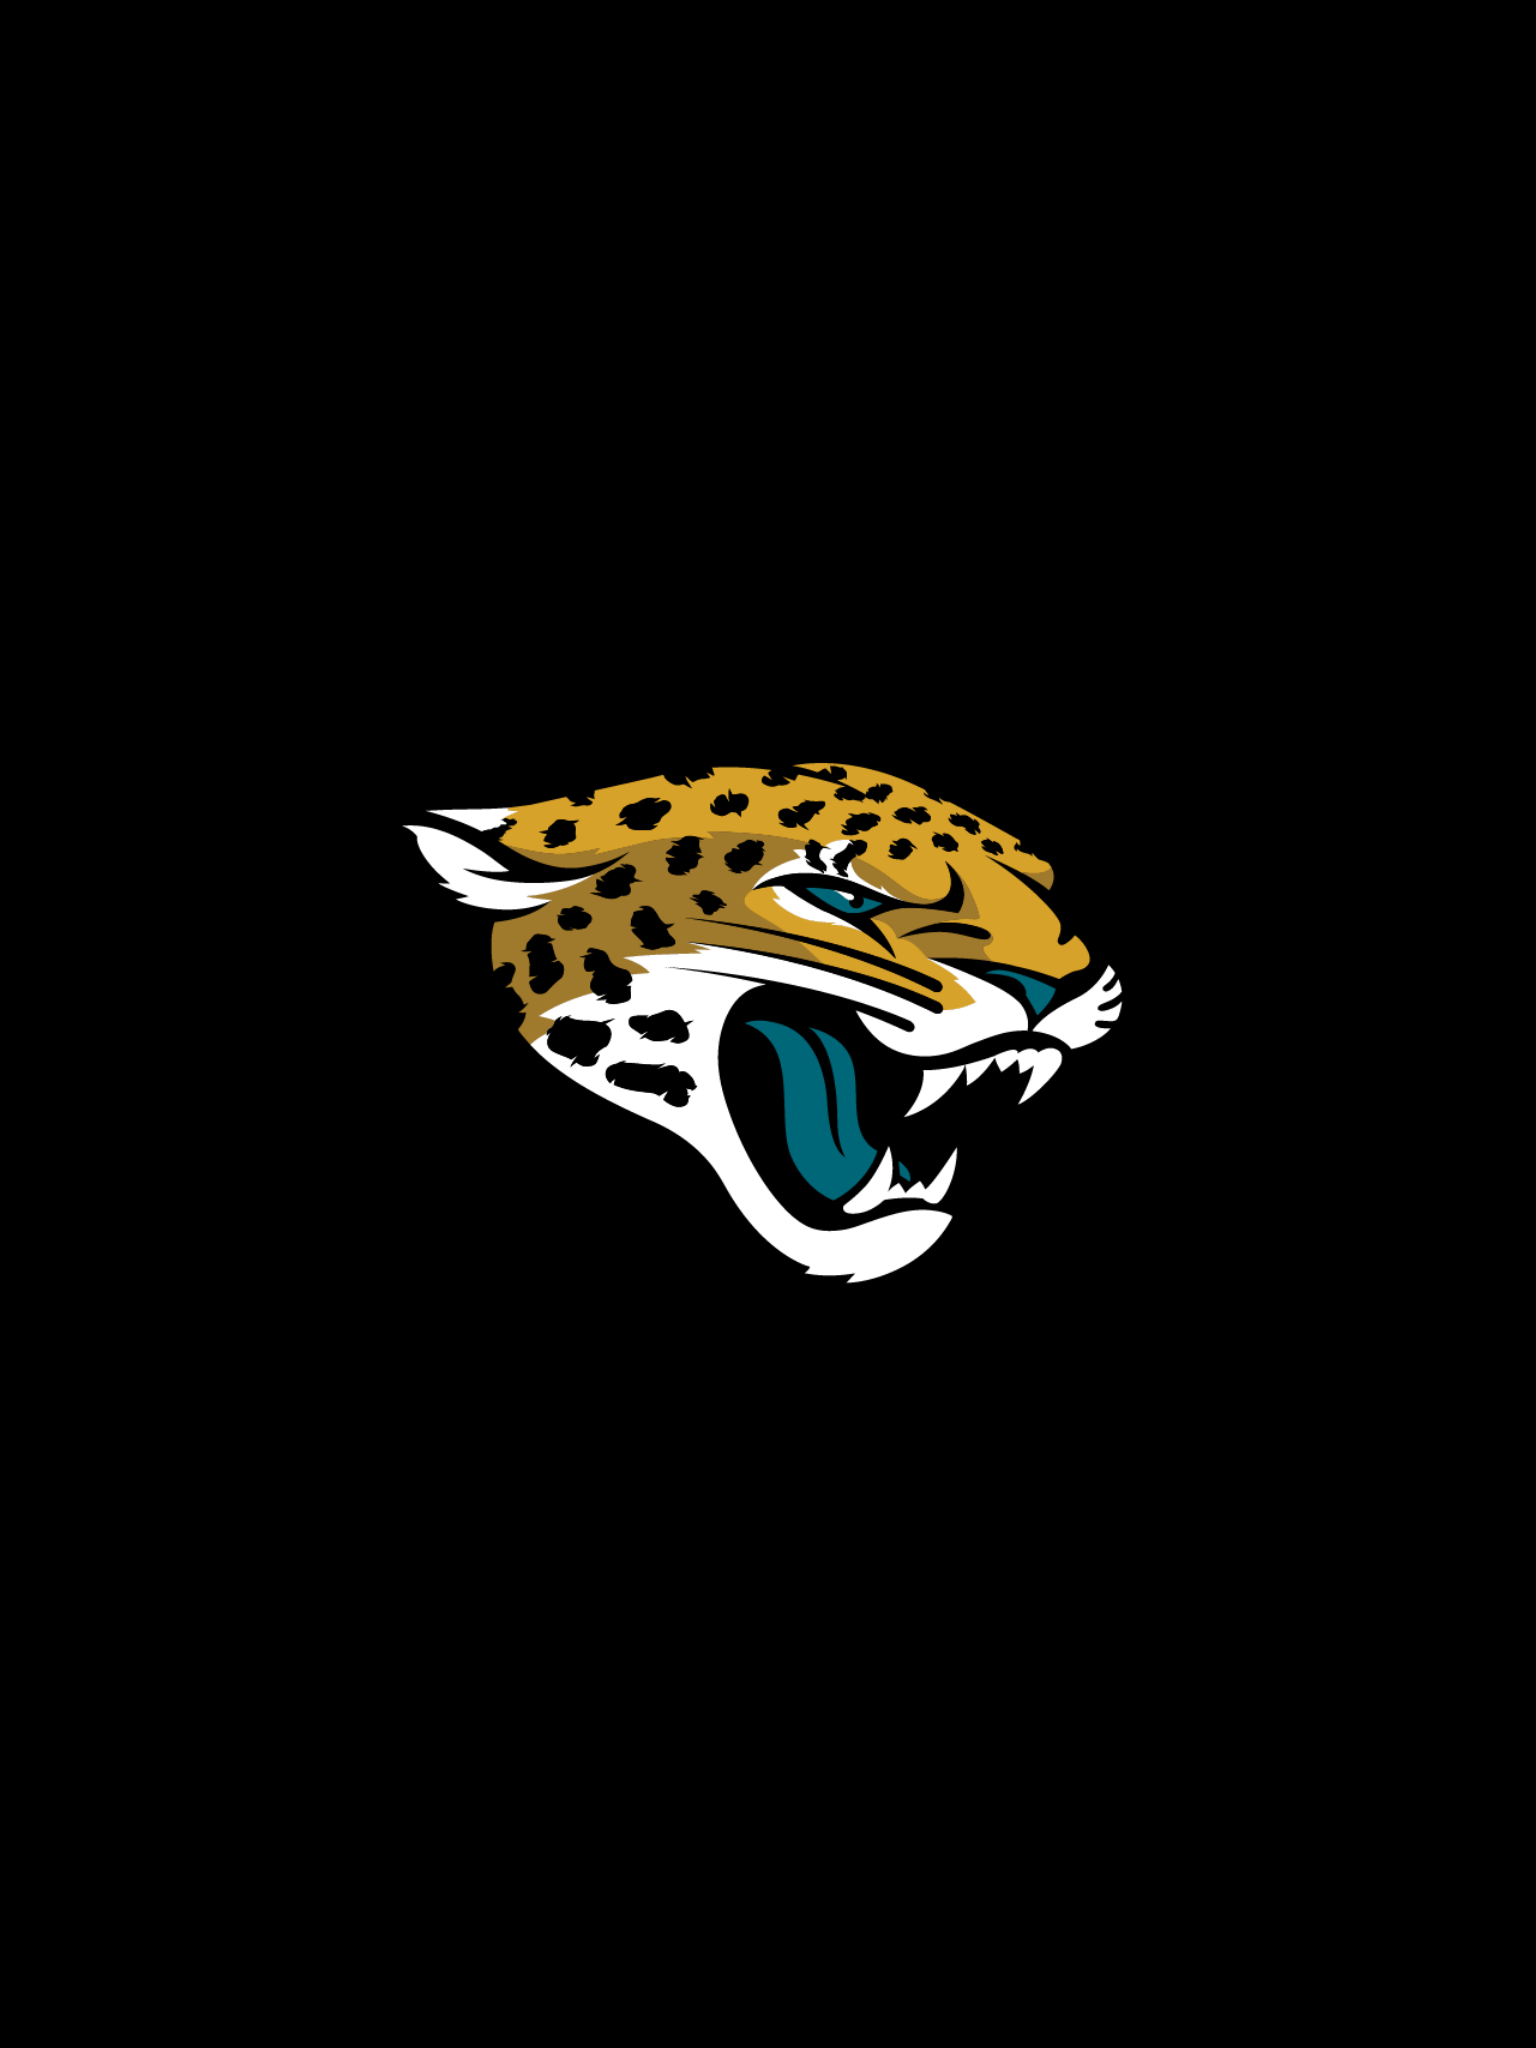 NFL Jaguars New Logo - iPhone Backgrounds: New Logo! : Jaguars